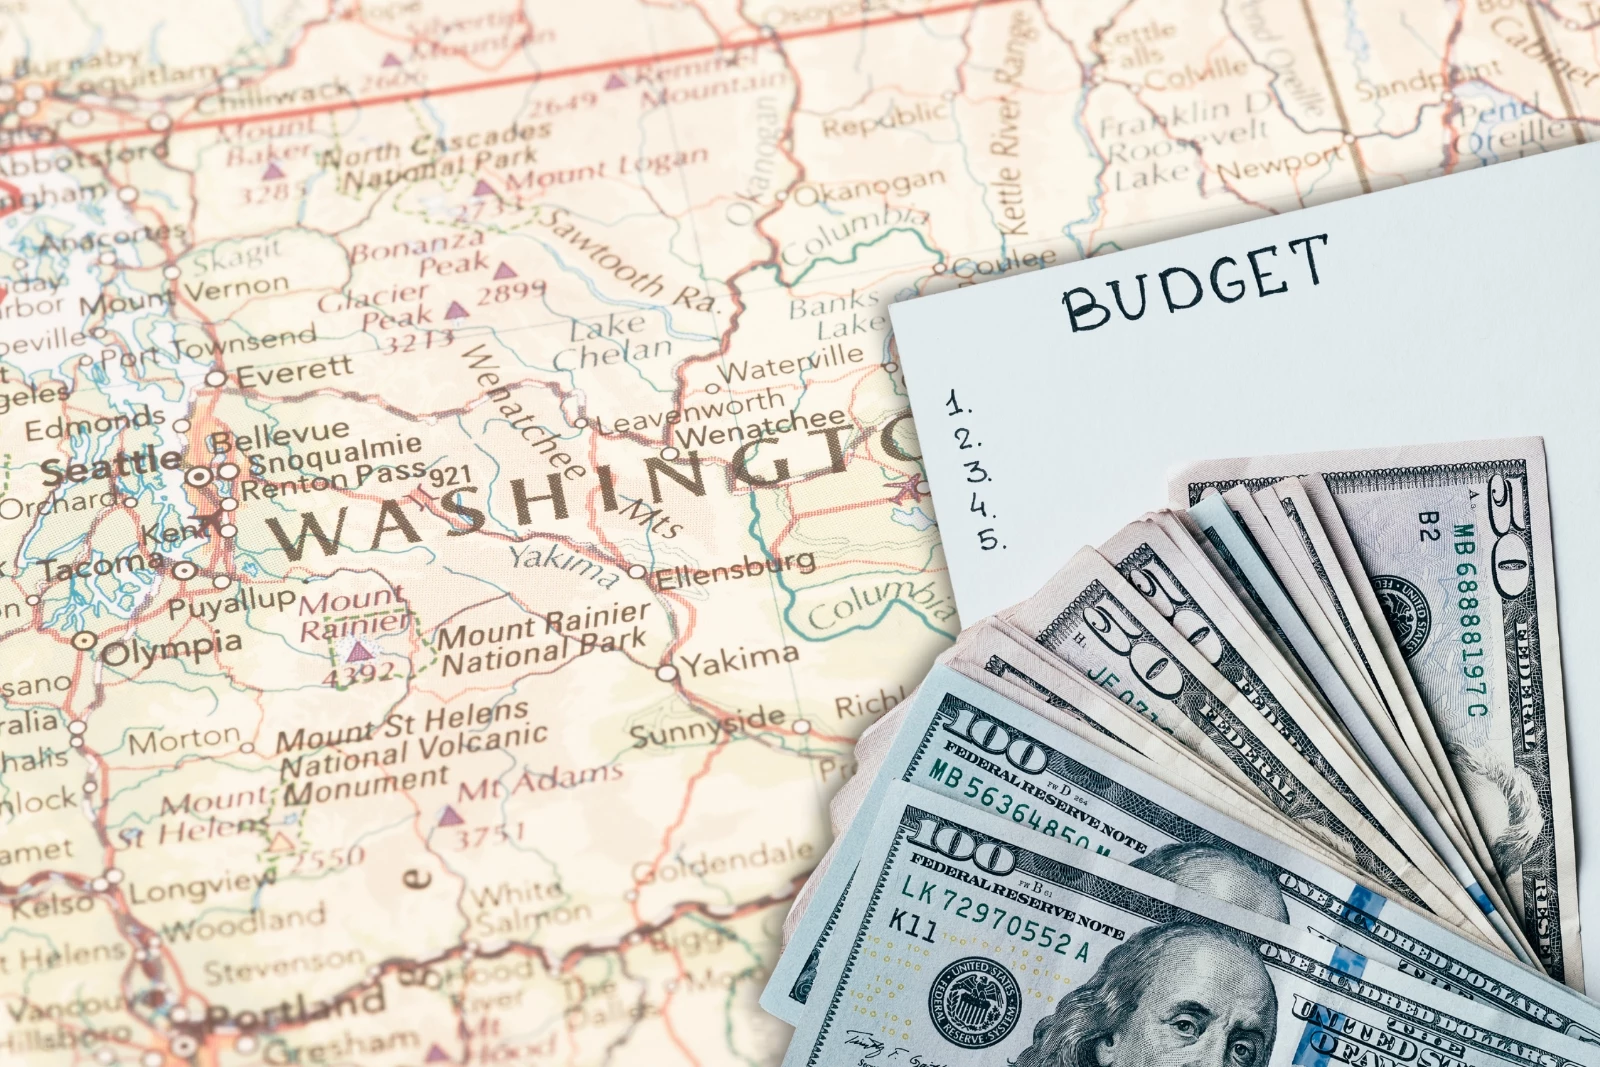 7 Washington Cities That Will Make Your Dollar Last Longer